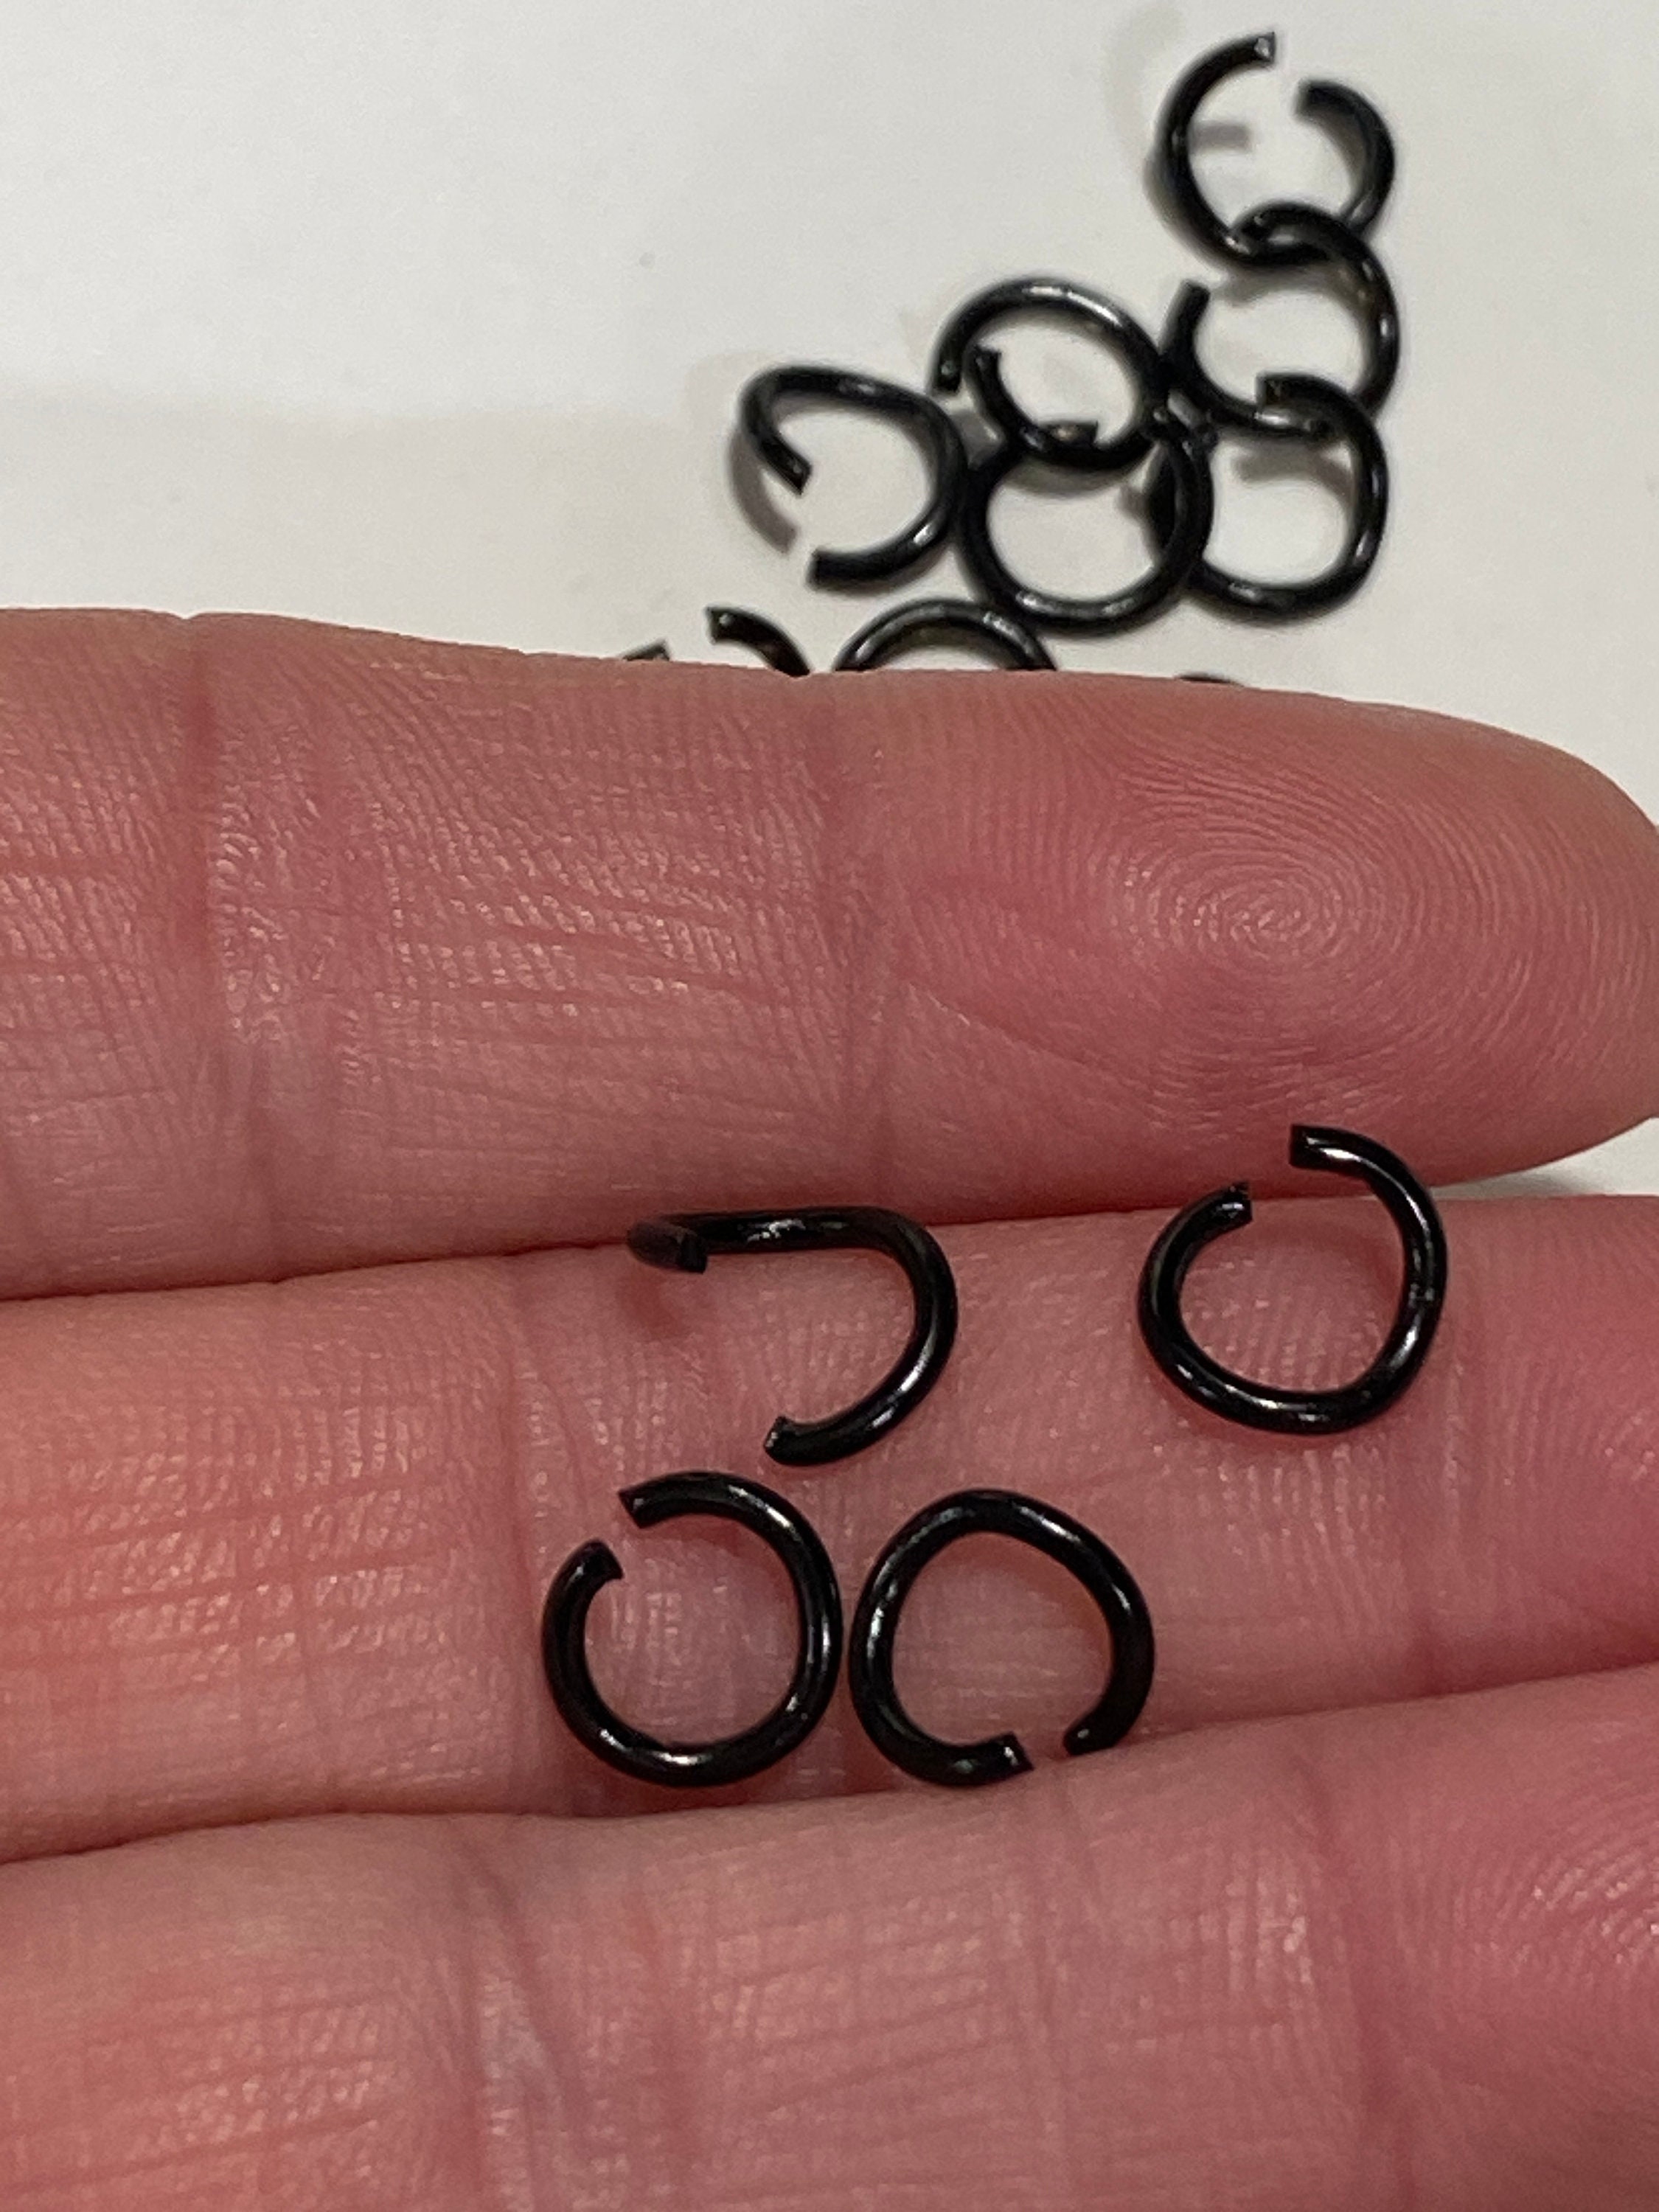 100 Glossy Black Anodized Niobium Jump Rings in Your Pick of Diameter